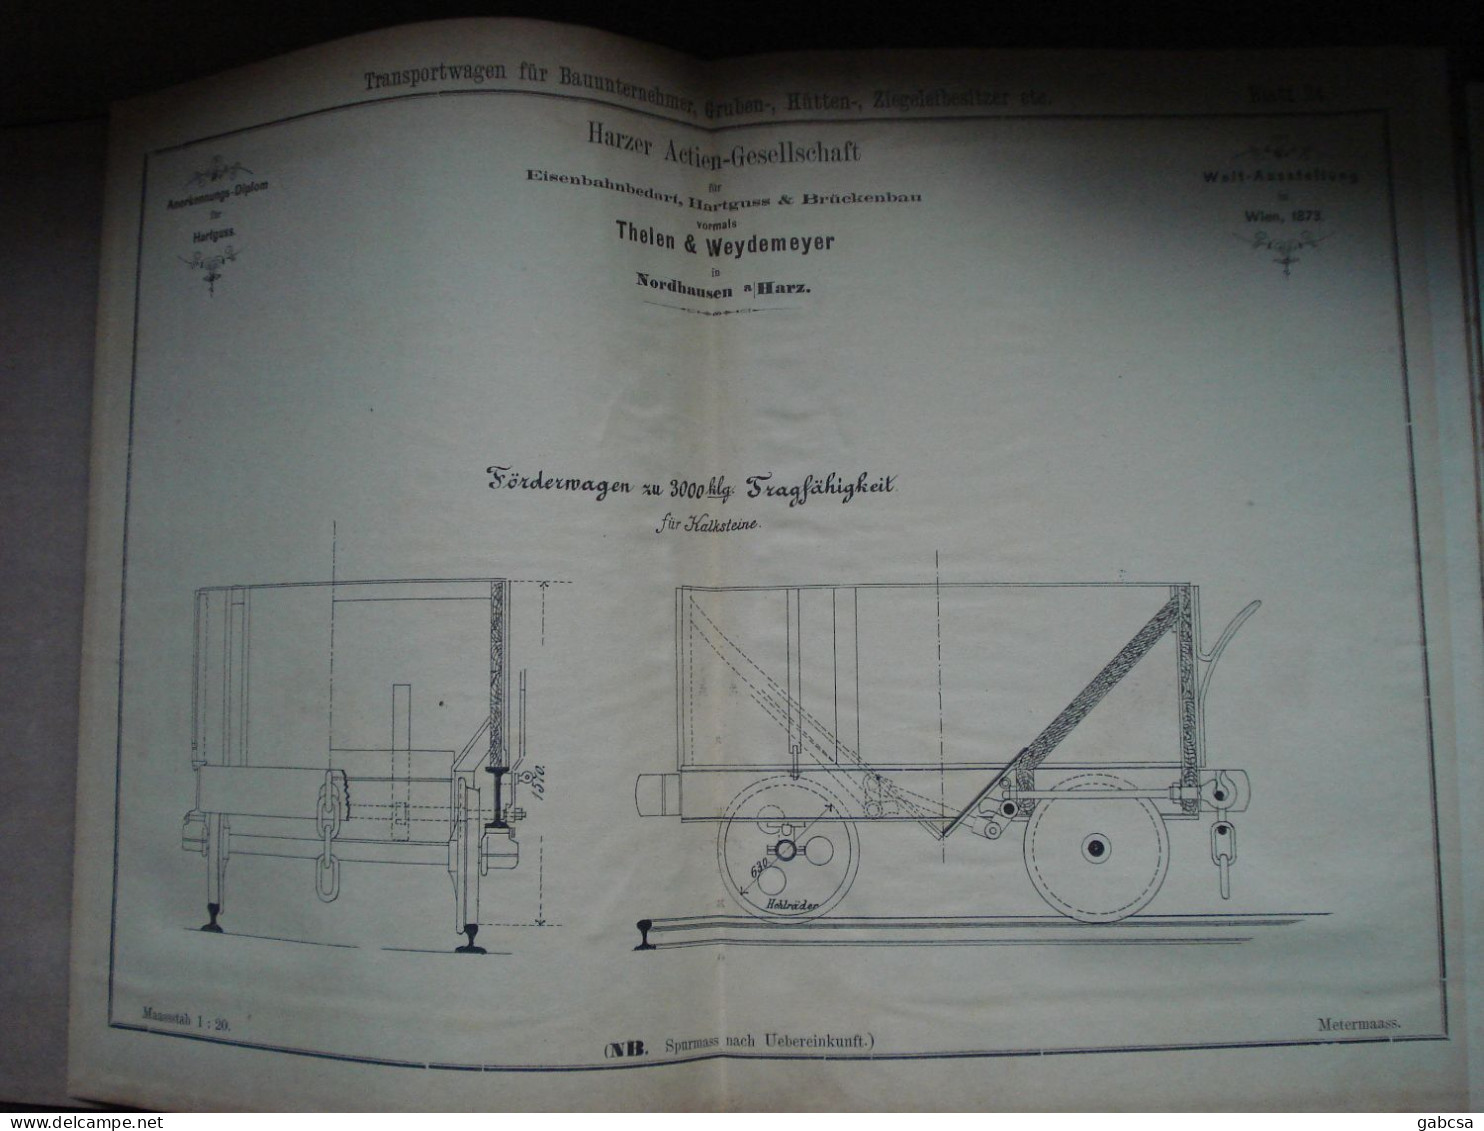 Rollwagen Plans 1872-73 Handmade "Kolos" And 18 Harzer Aktiengesellschaft Plan Printed In Book - Materiaal En Toebehoren